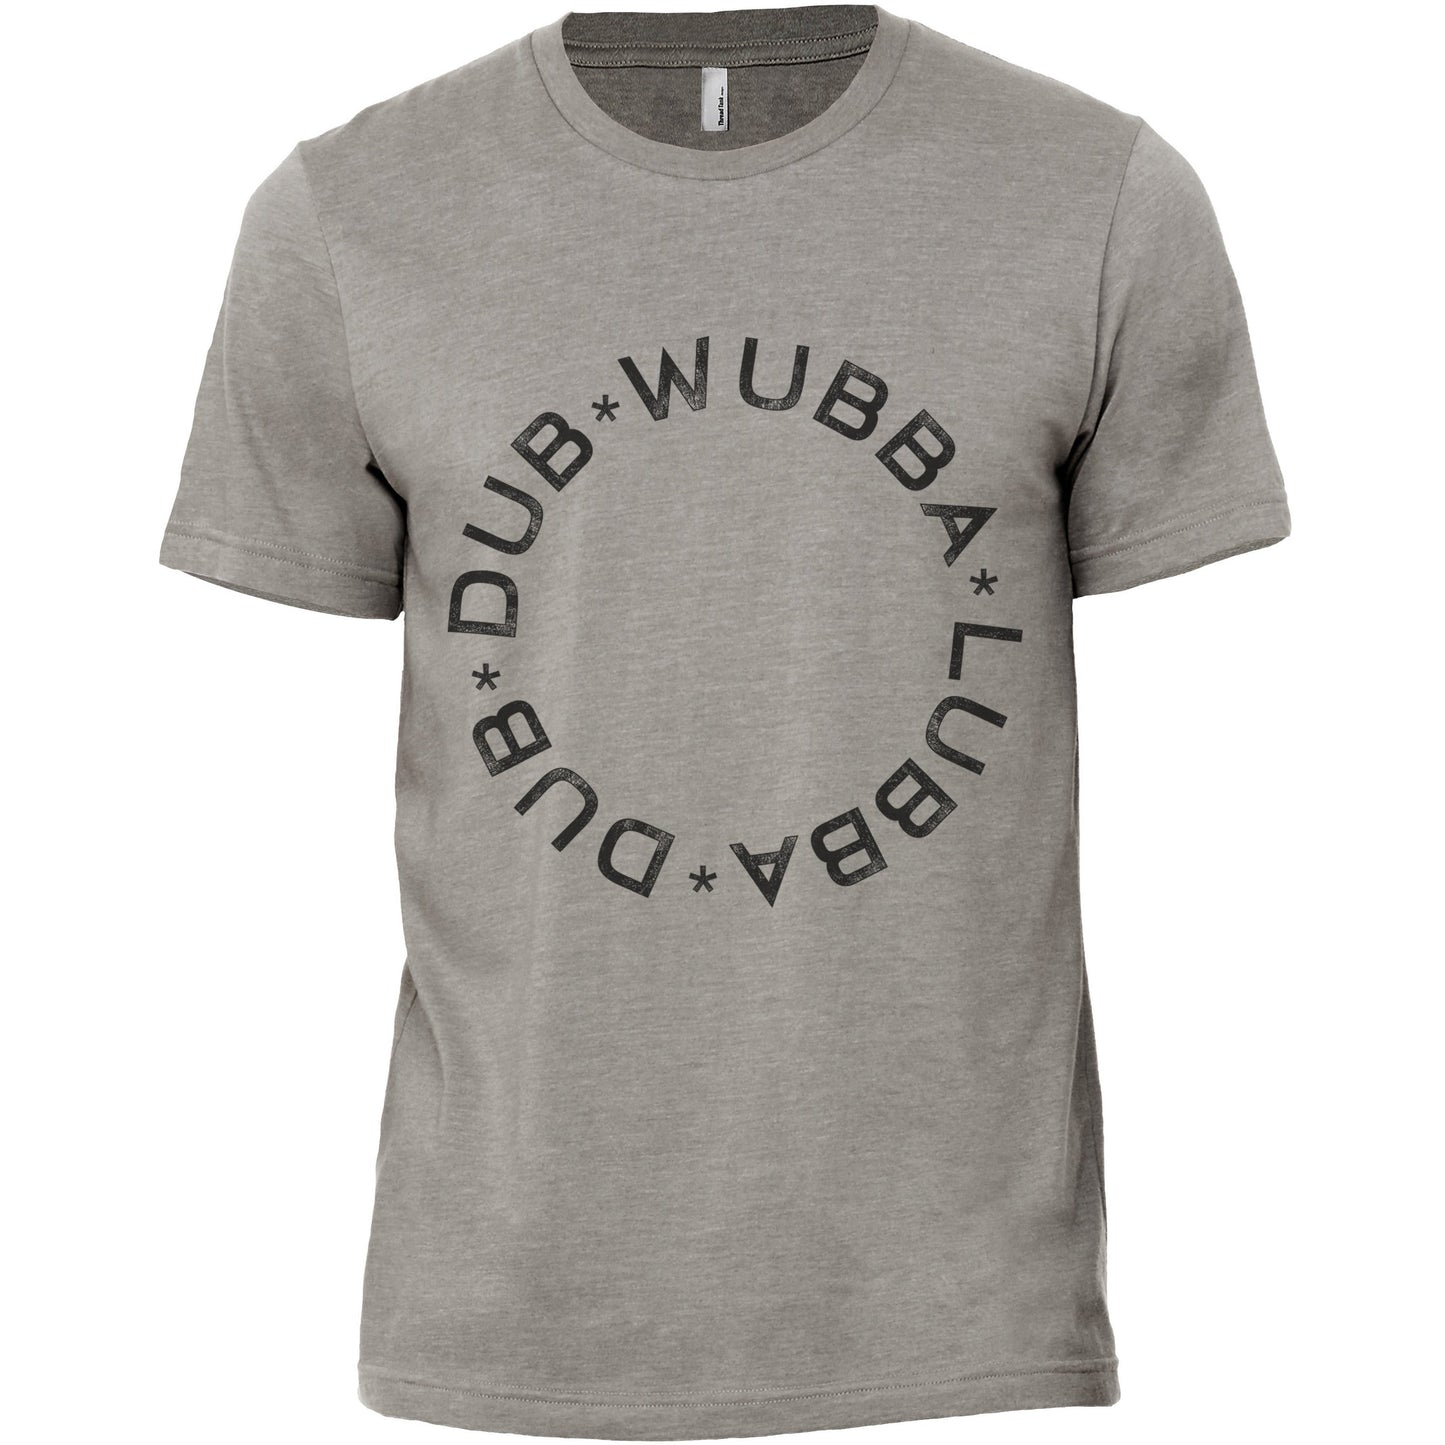 Wubba Lubba Dub Dub - Stories You Can Wear